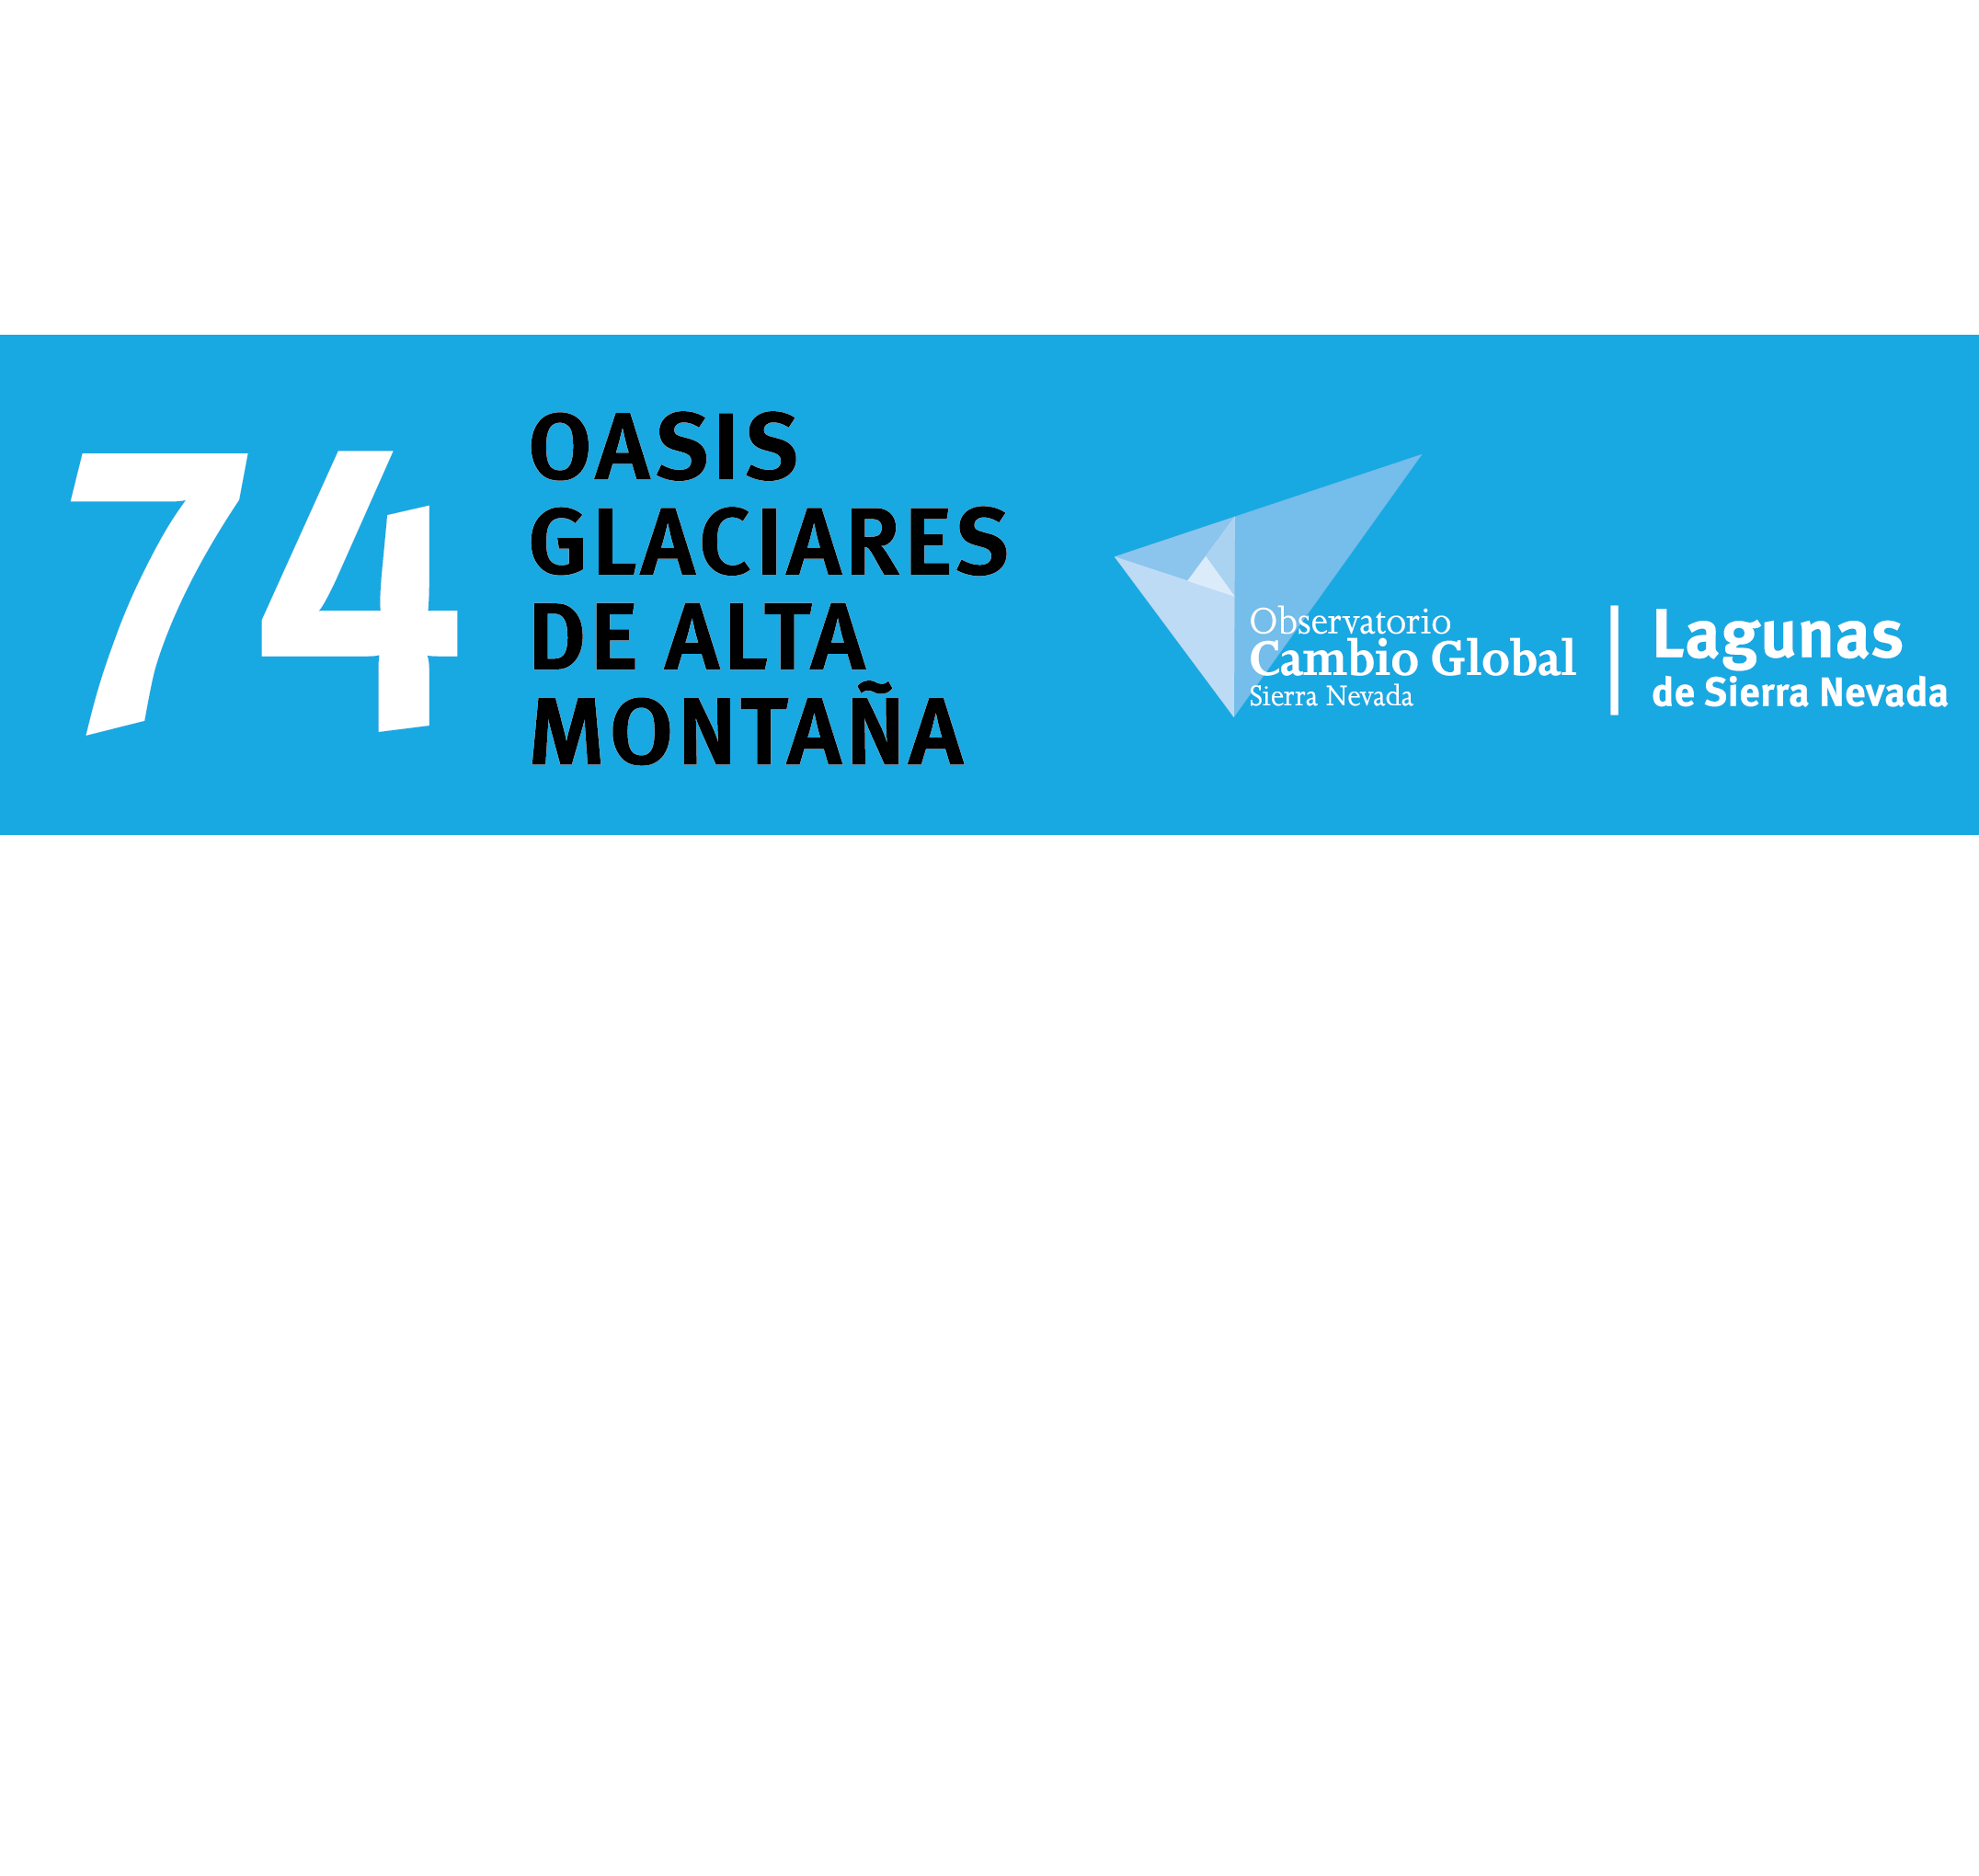 Logo con el texto "74 oasis glaciares de alta montaña"